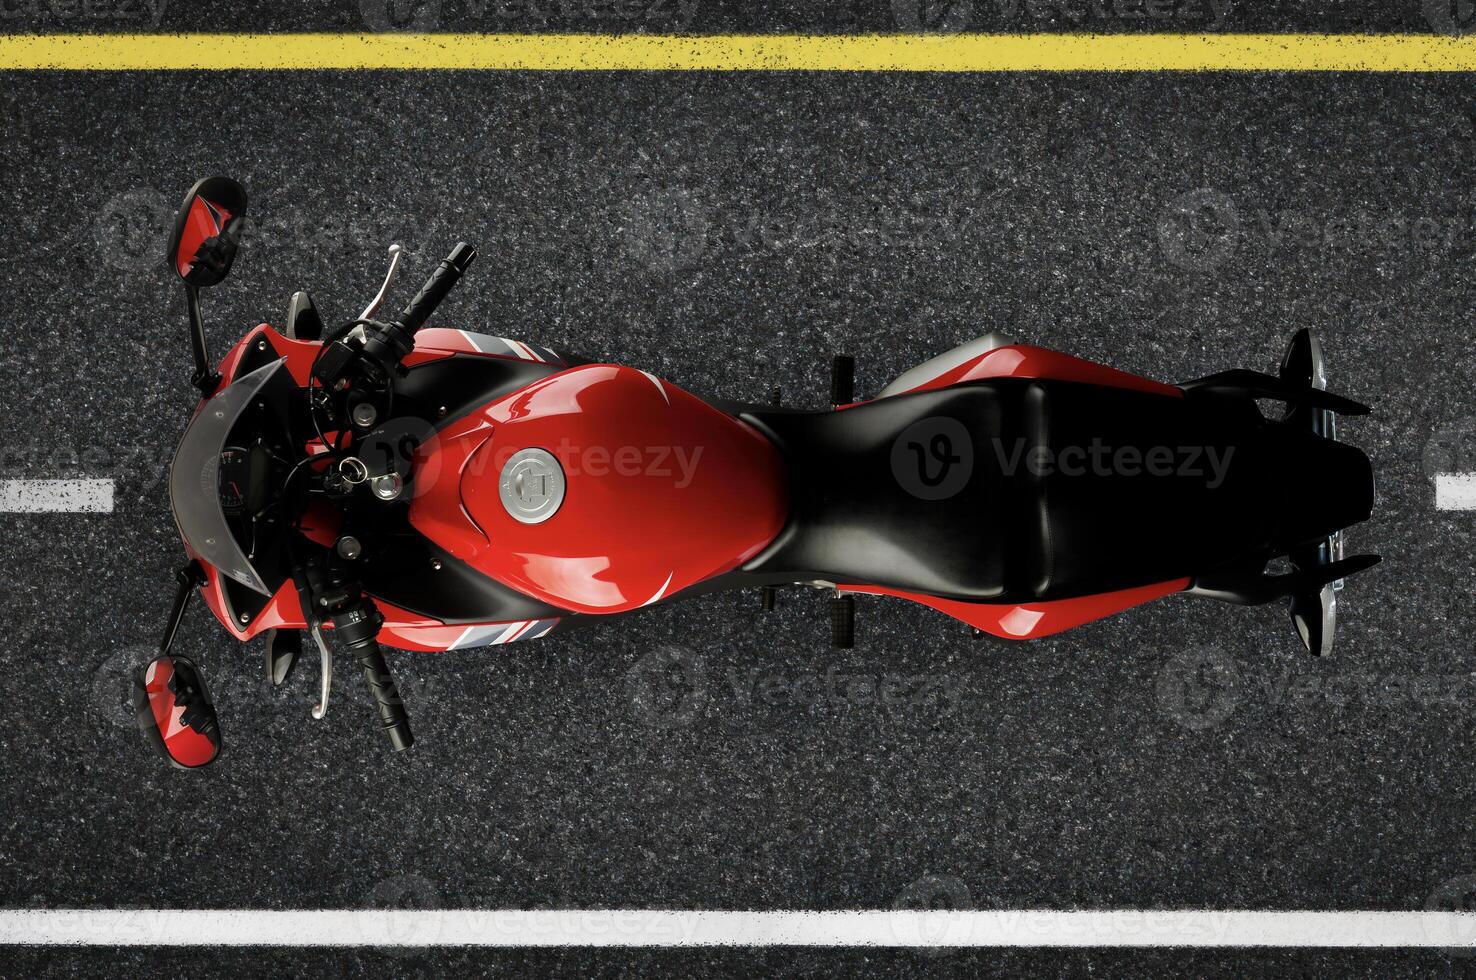 antenne visie van rood sport- type motor met brandstof injectie systeem, 250 cc motor, foto